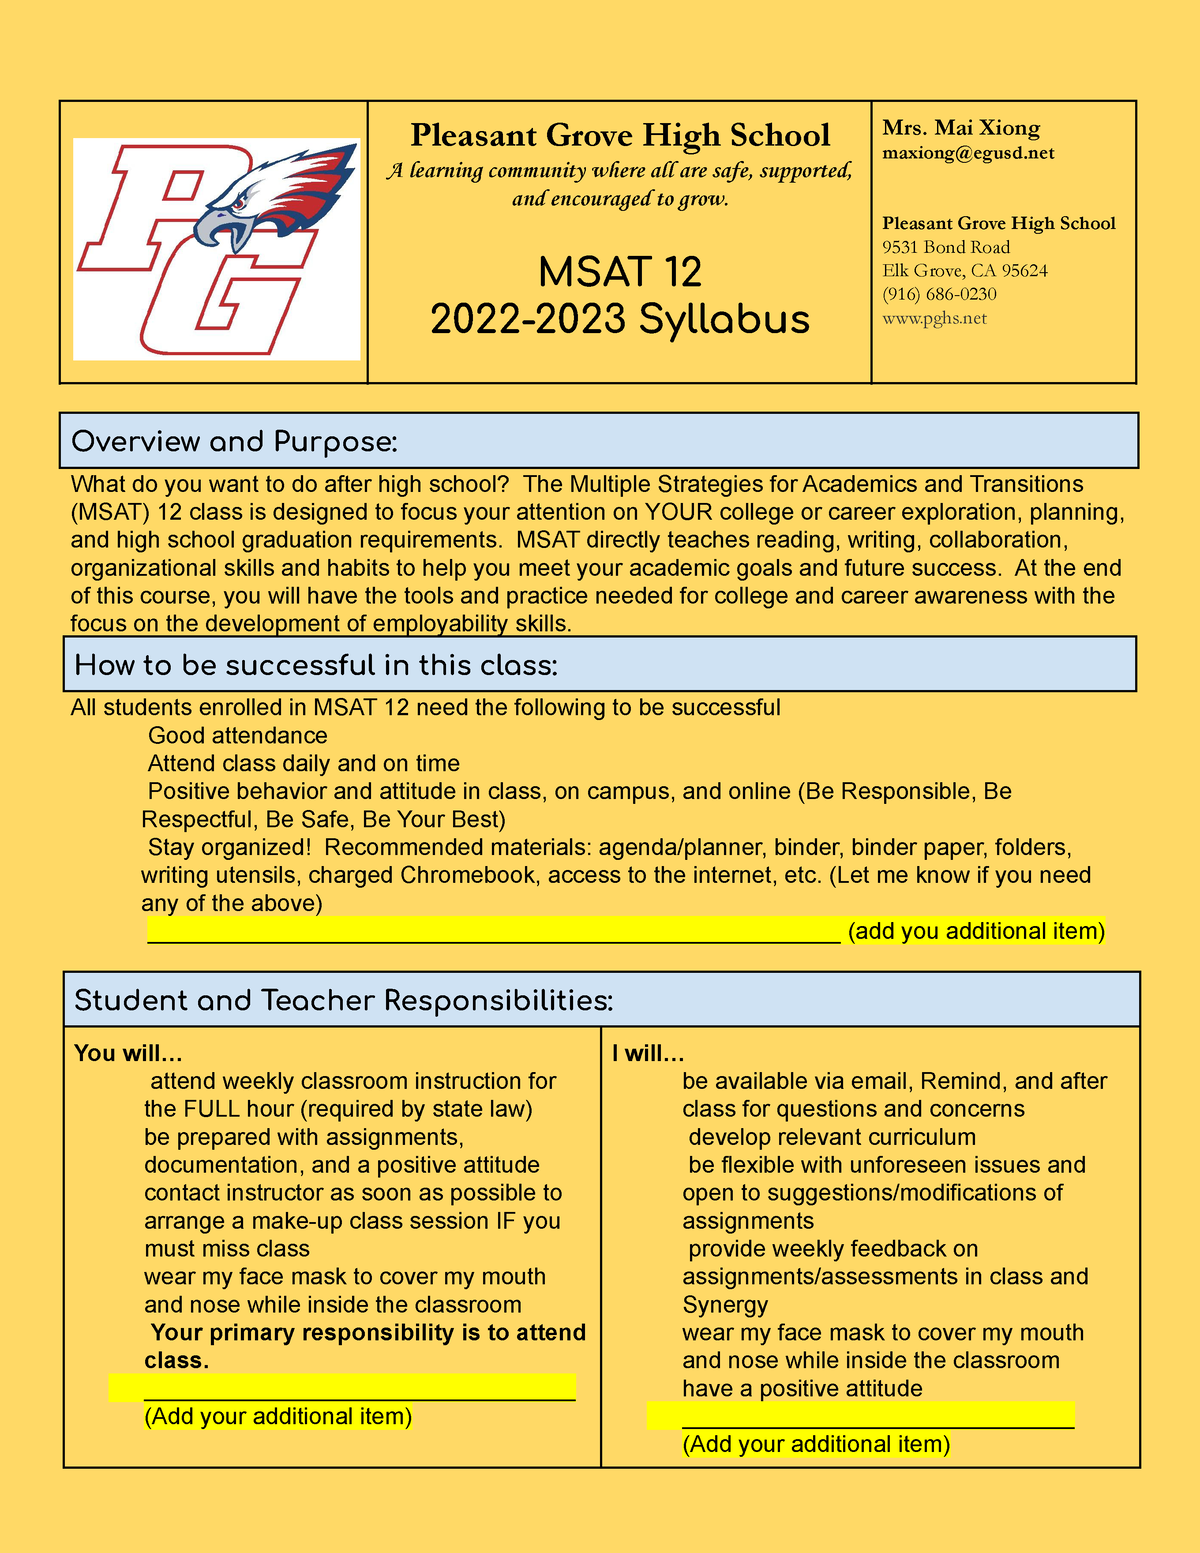 2022-2023-msat-12-student-centered-syllabus-pleasant-grove-high